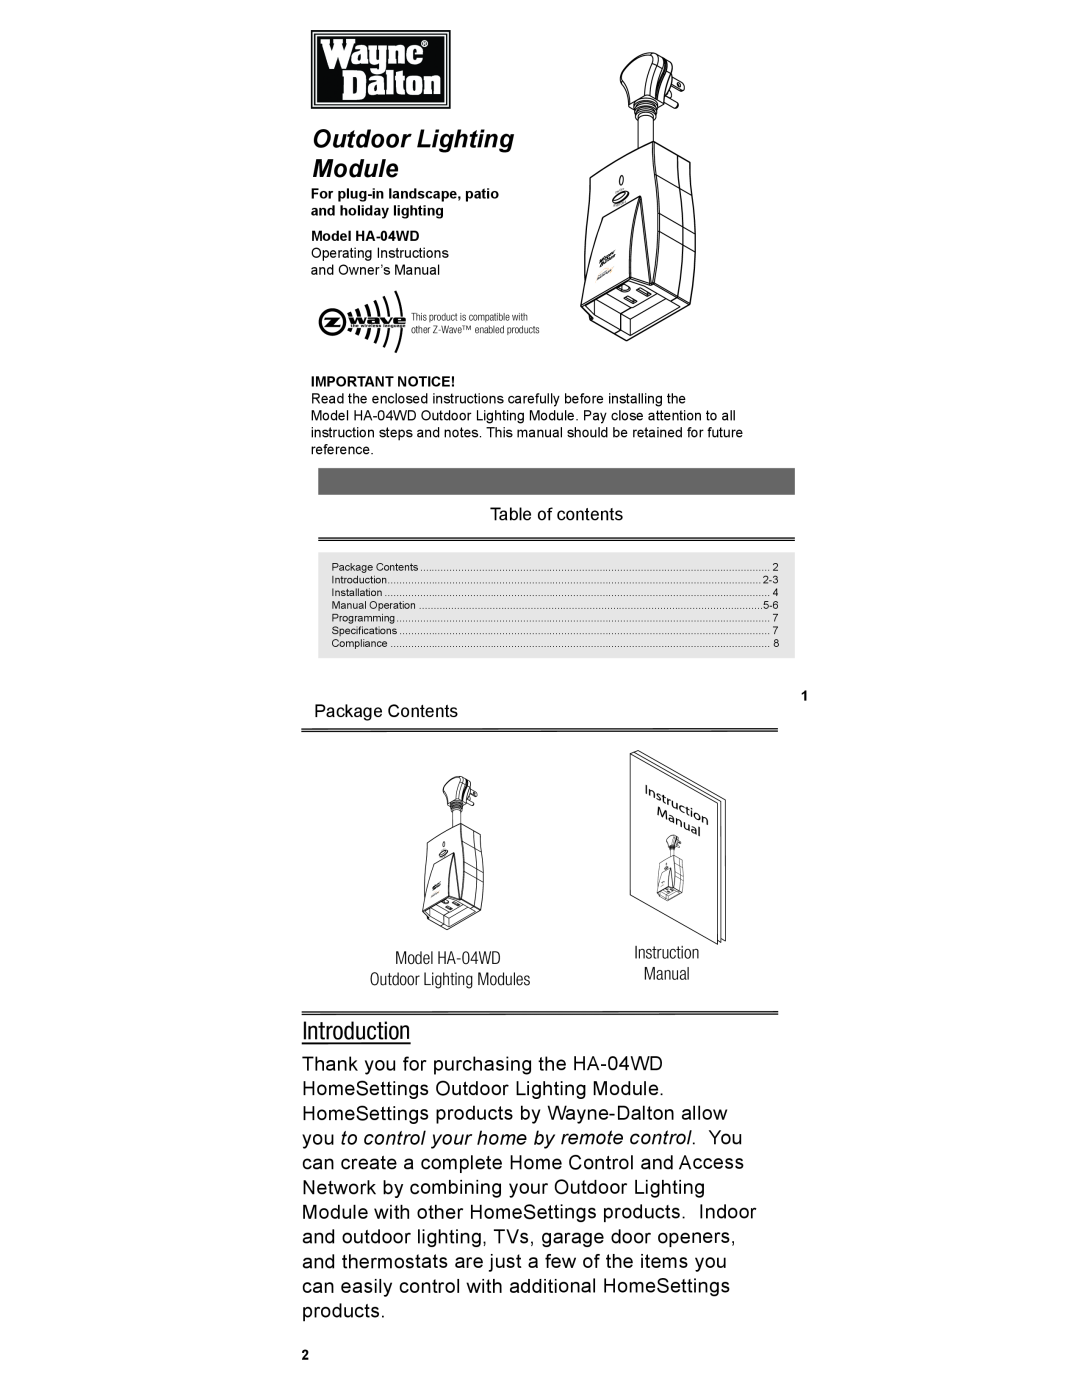 Wayne-Dalton HA-04WD operating instructions Outdoor Lighting Module, Introduction 